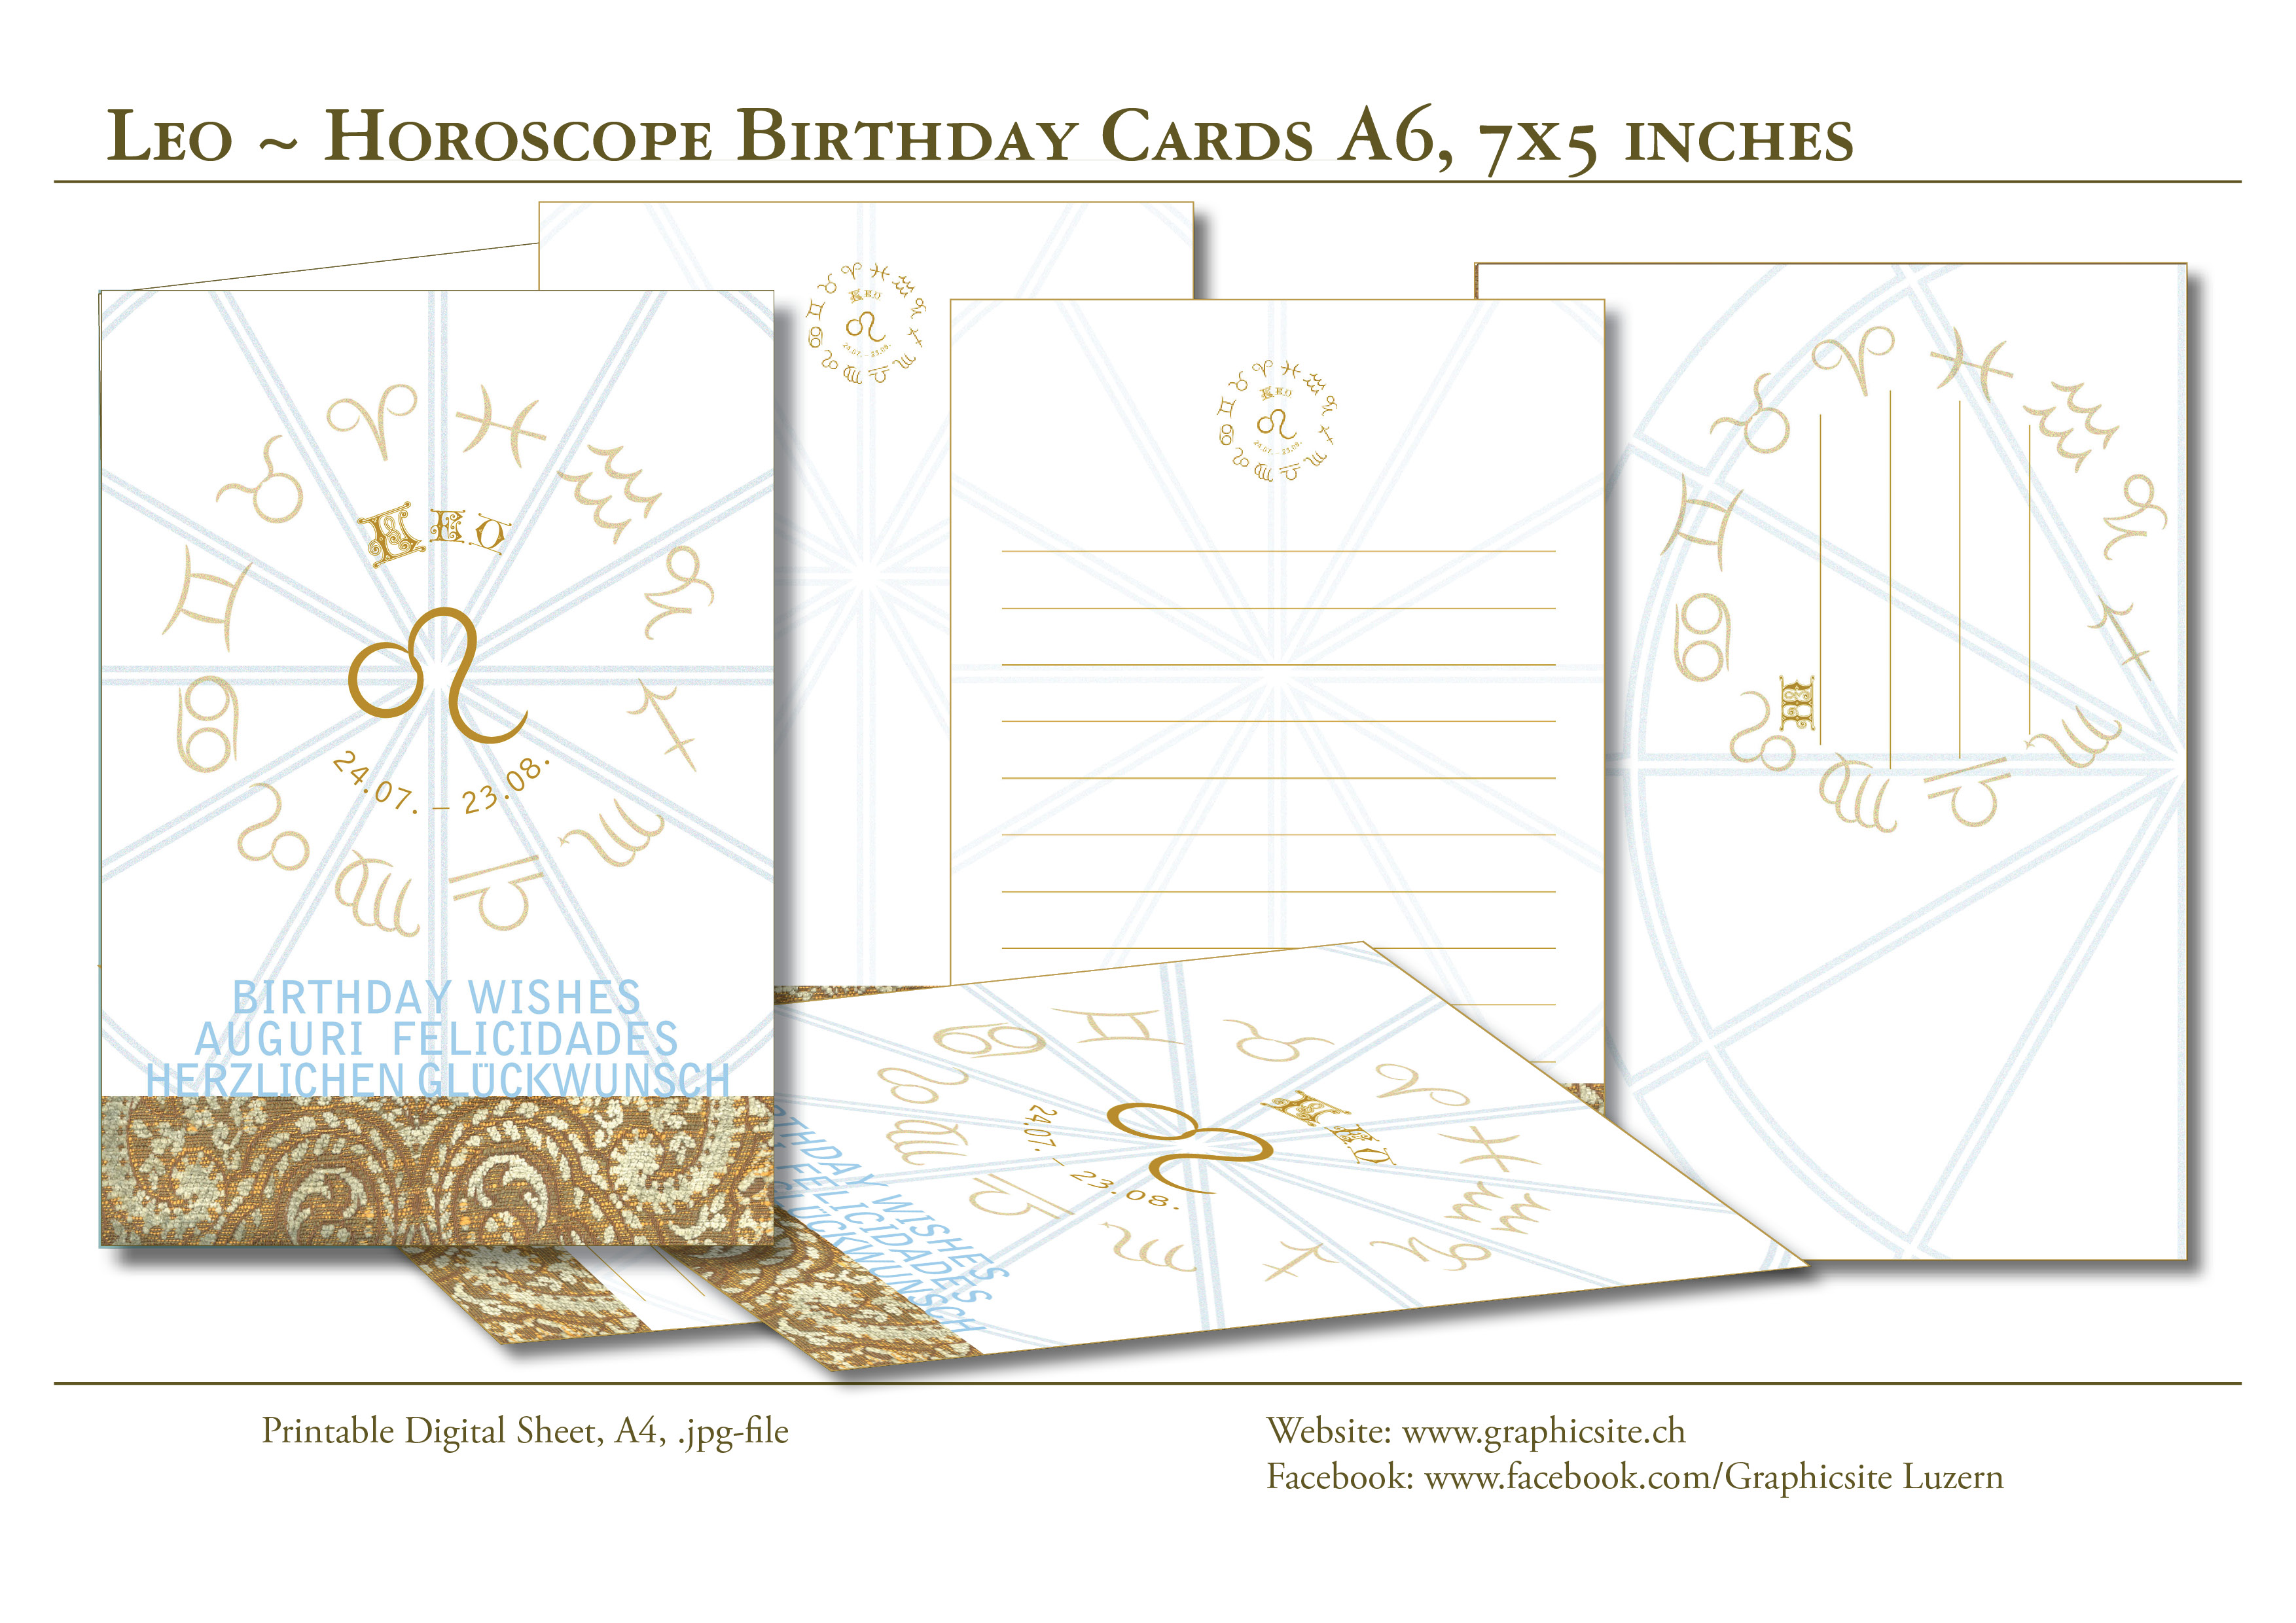 Printable Digital Sheets - Birthday Card Collection - Horoscope - Zodiac - Leo A6 - GraphicDesign, Luzern